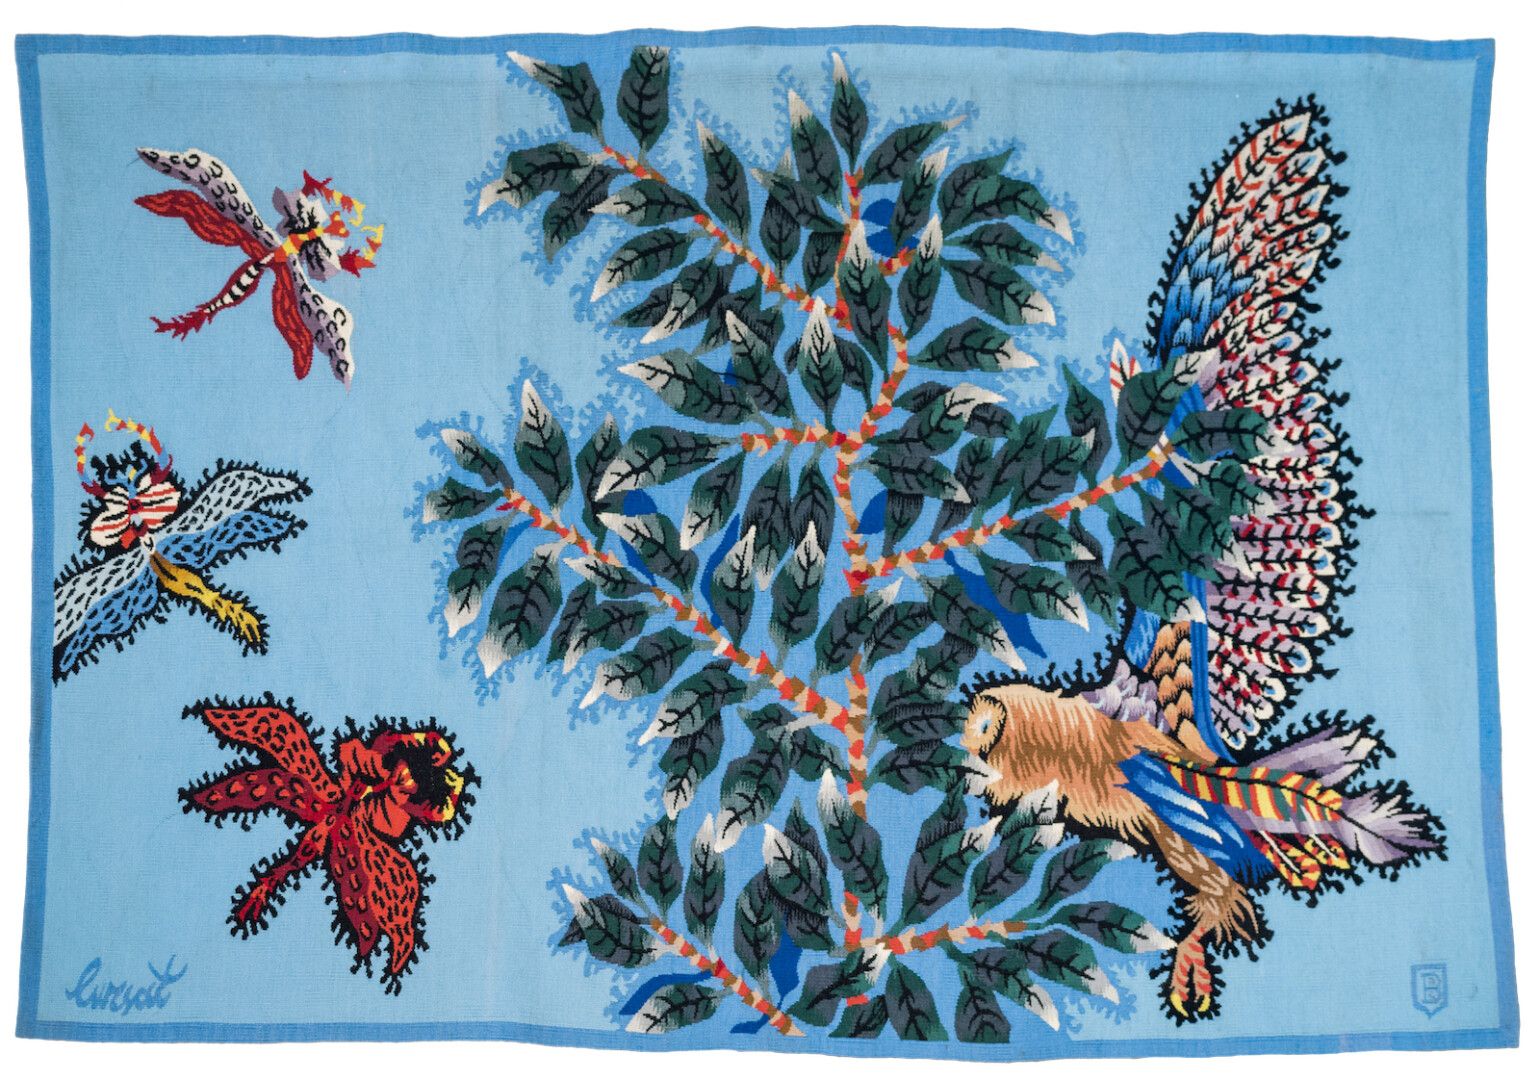 Null 让-卢卡 (1892 - 1966)

这三种昆虫

挂毯

122 x 178 cm